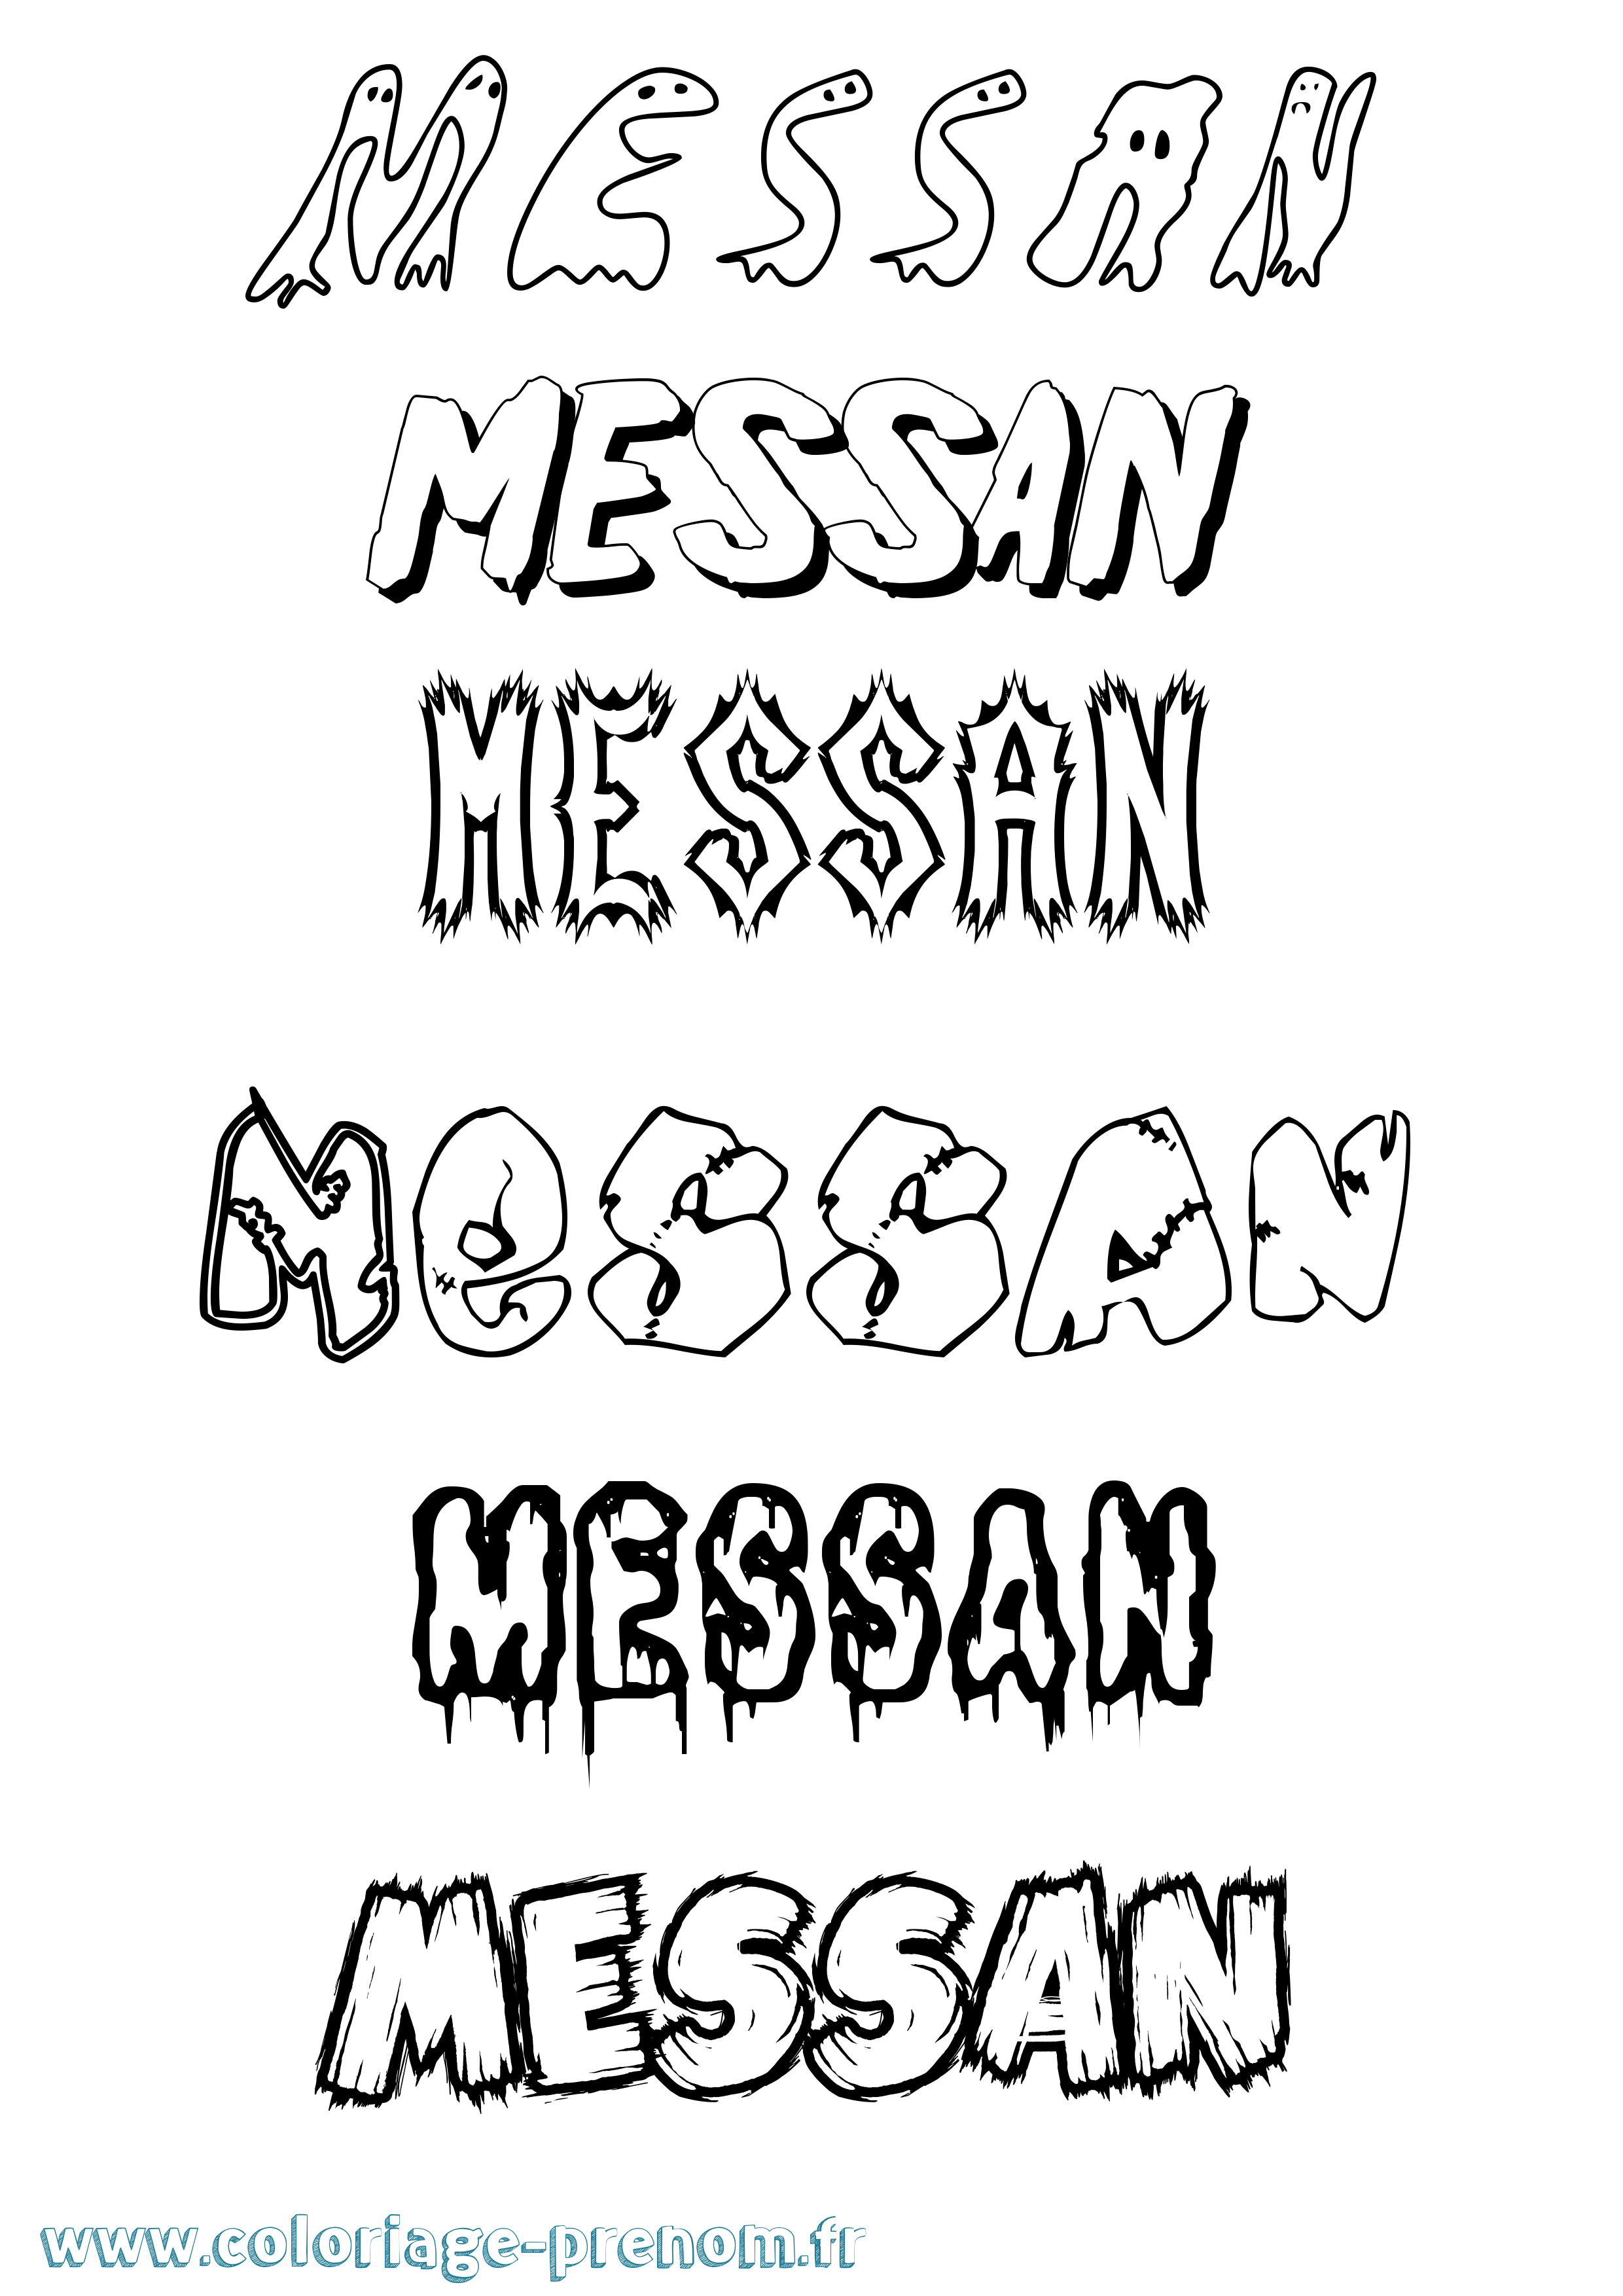 Coloriage prénom Messan Frisson